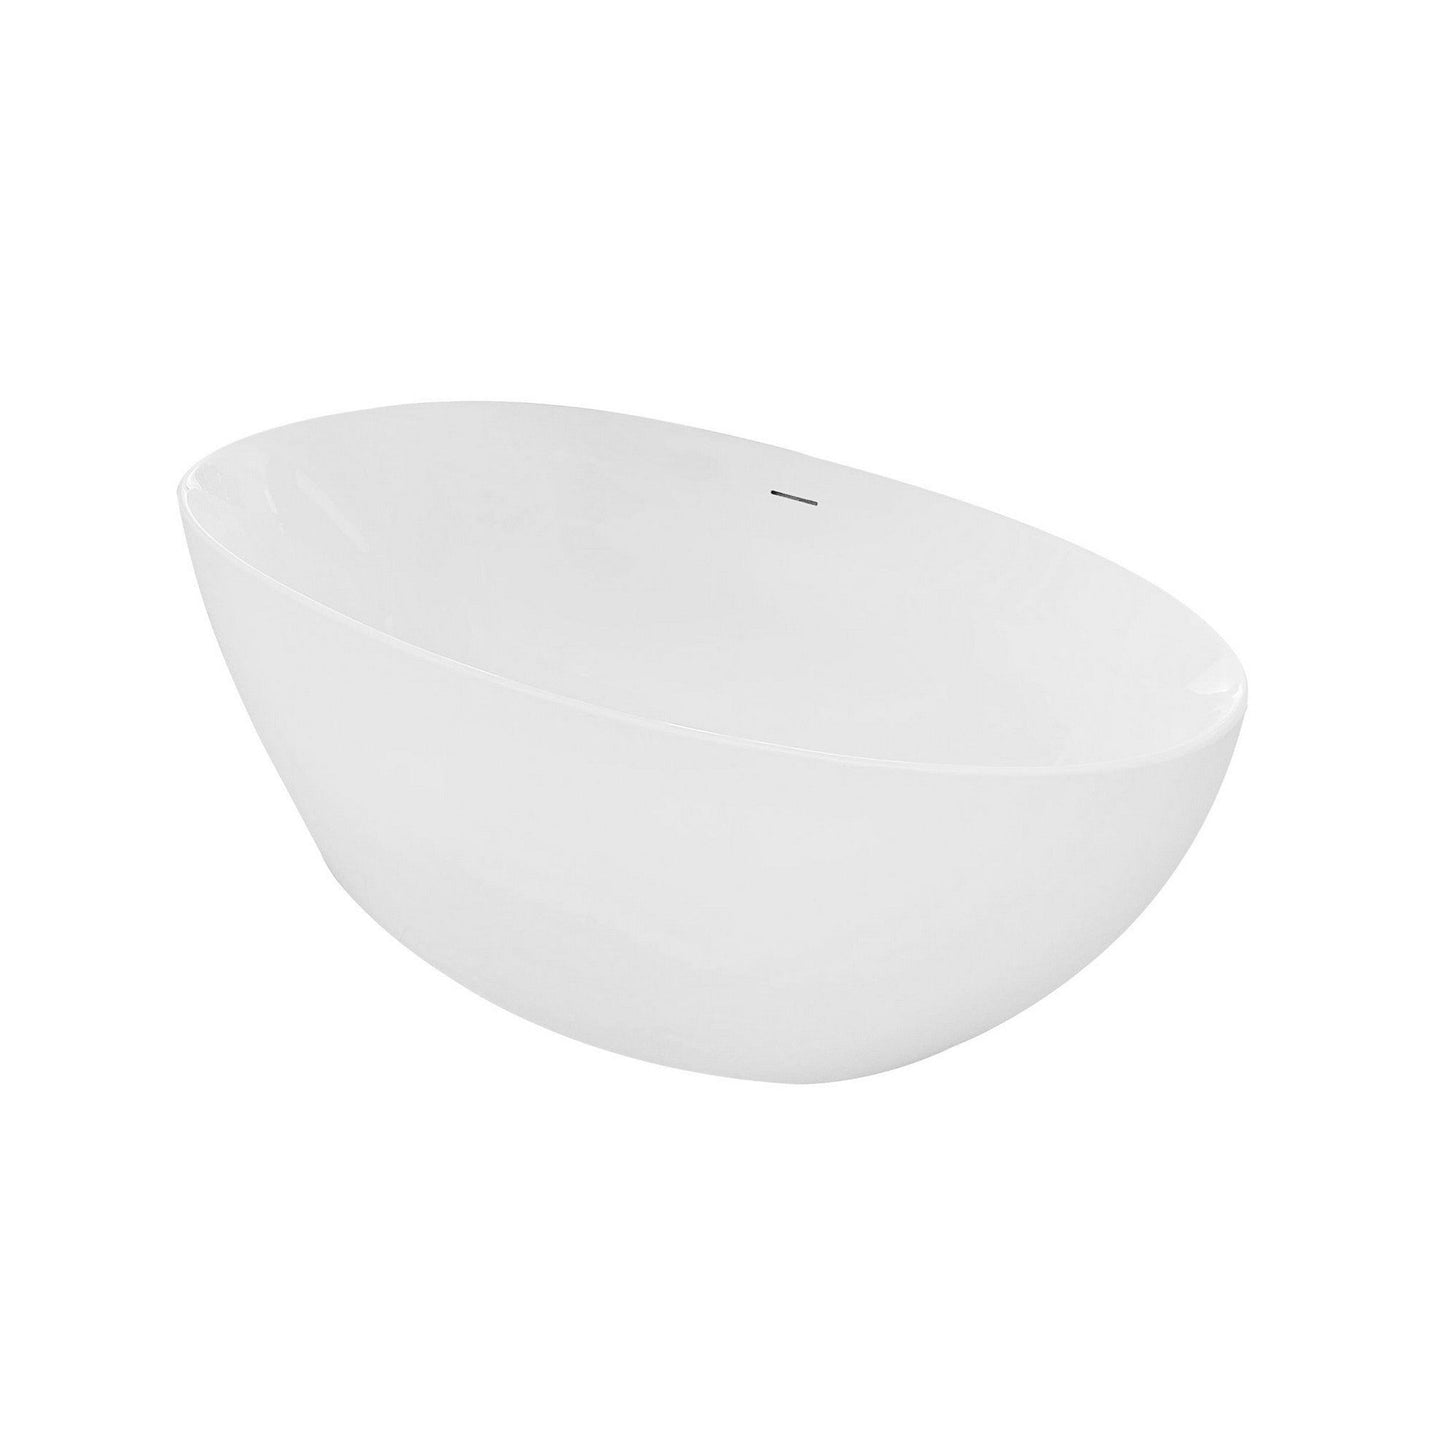 Ratel 59" x 31" Oval White Gloss Acrylic Freestanding Bathtub